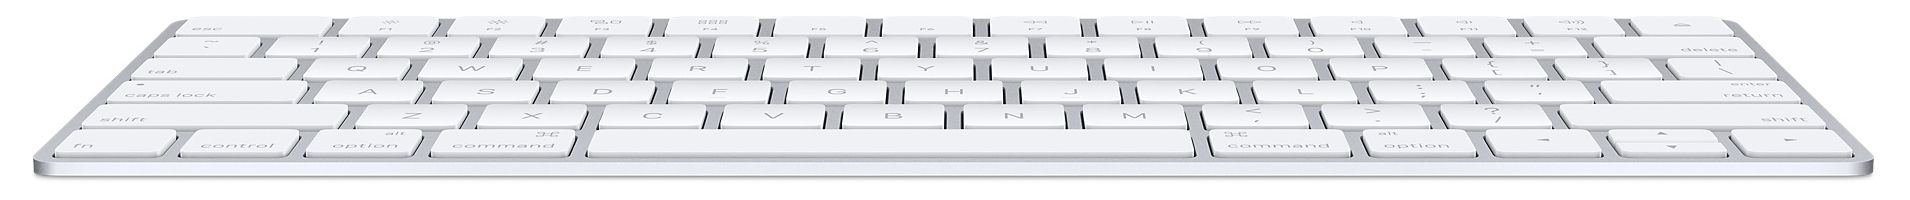 Клавиатура Apple Magic Keyboard с цифровой панелью, картинка 3